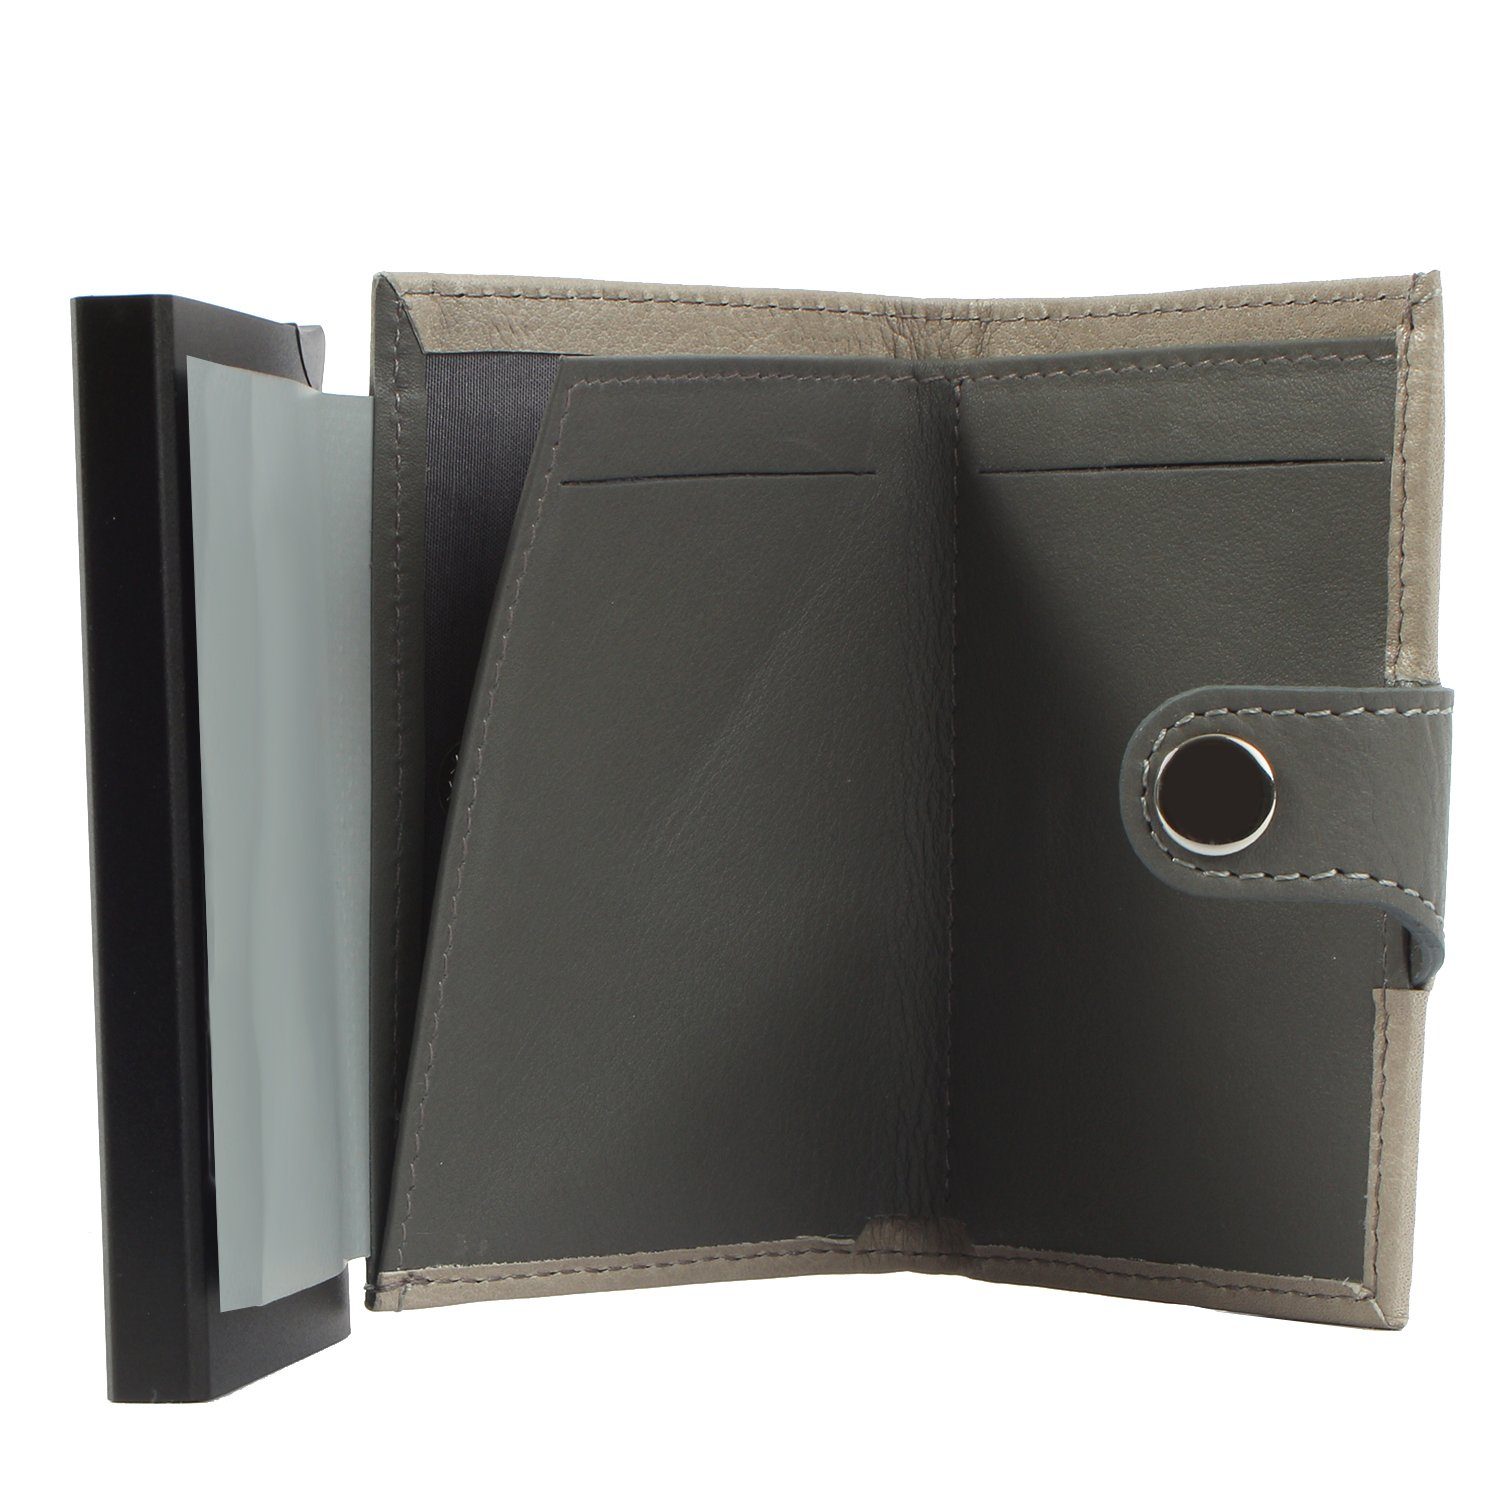 silverblue Mini Margelisch leather, Kreditkartenbörse single Leder aus noonyu Upcycling Geldbörse